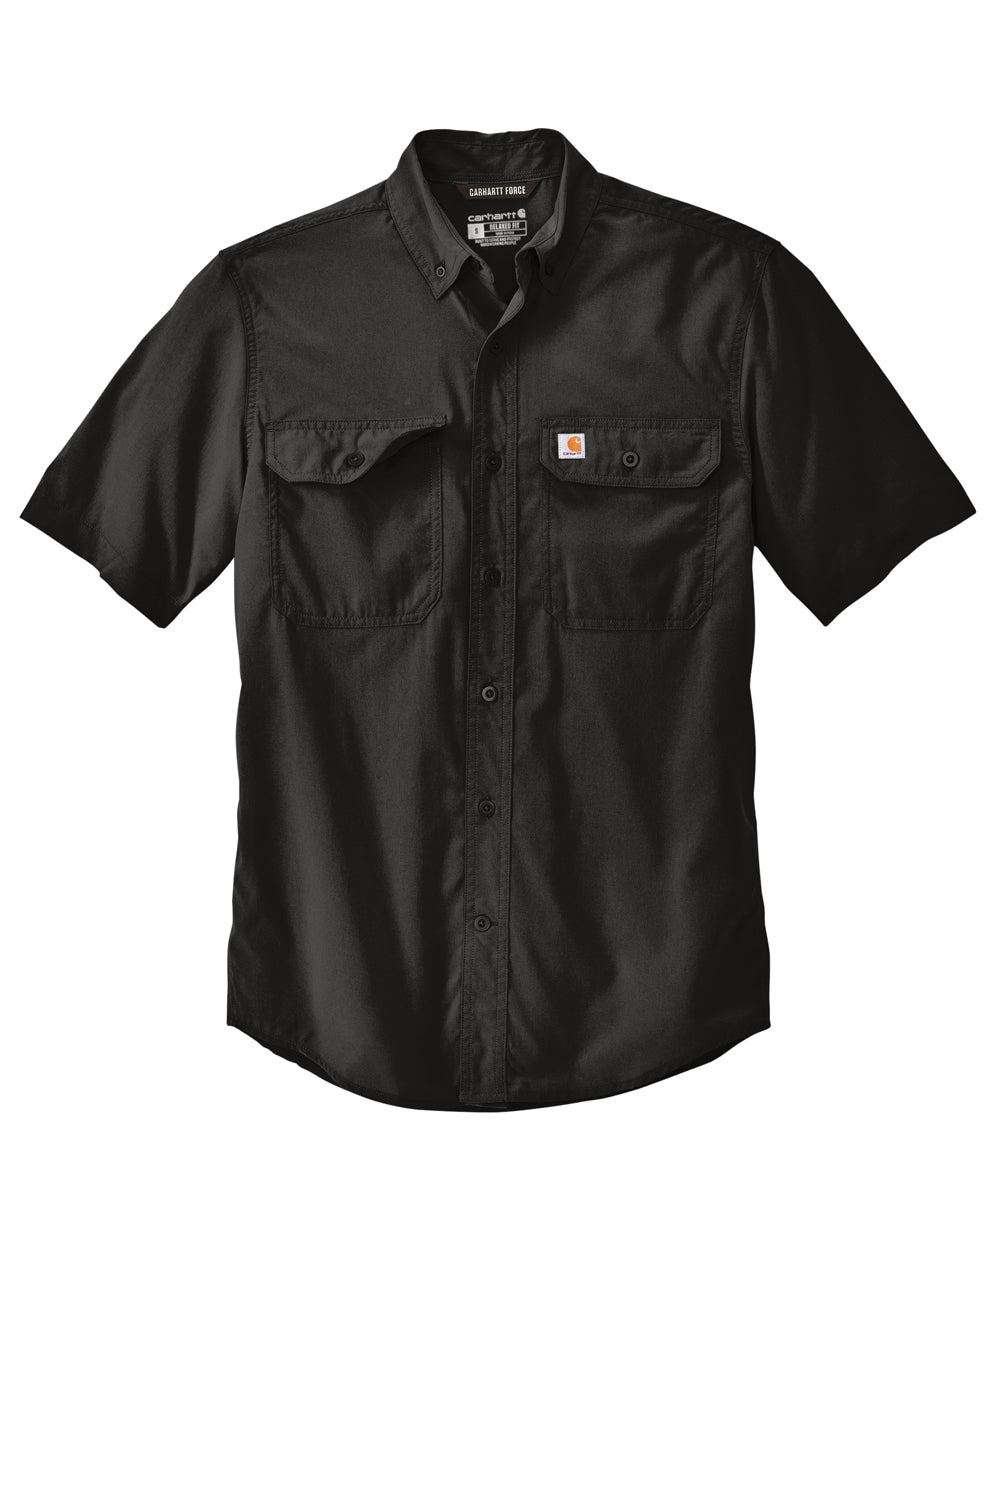 Carhartt CT105292 Mens Force Moisture Wicking Short Sleeve Button Down Shirt w/ Double Pockets Black Flat Front